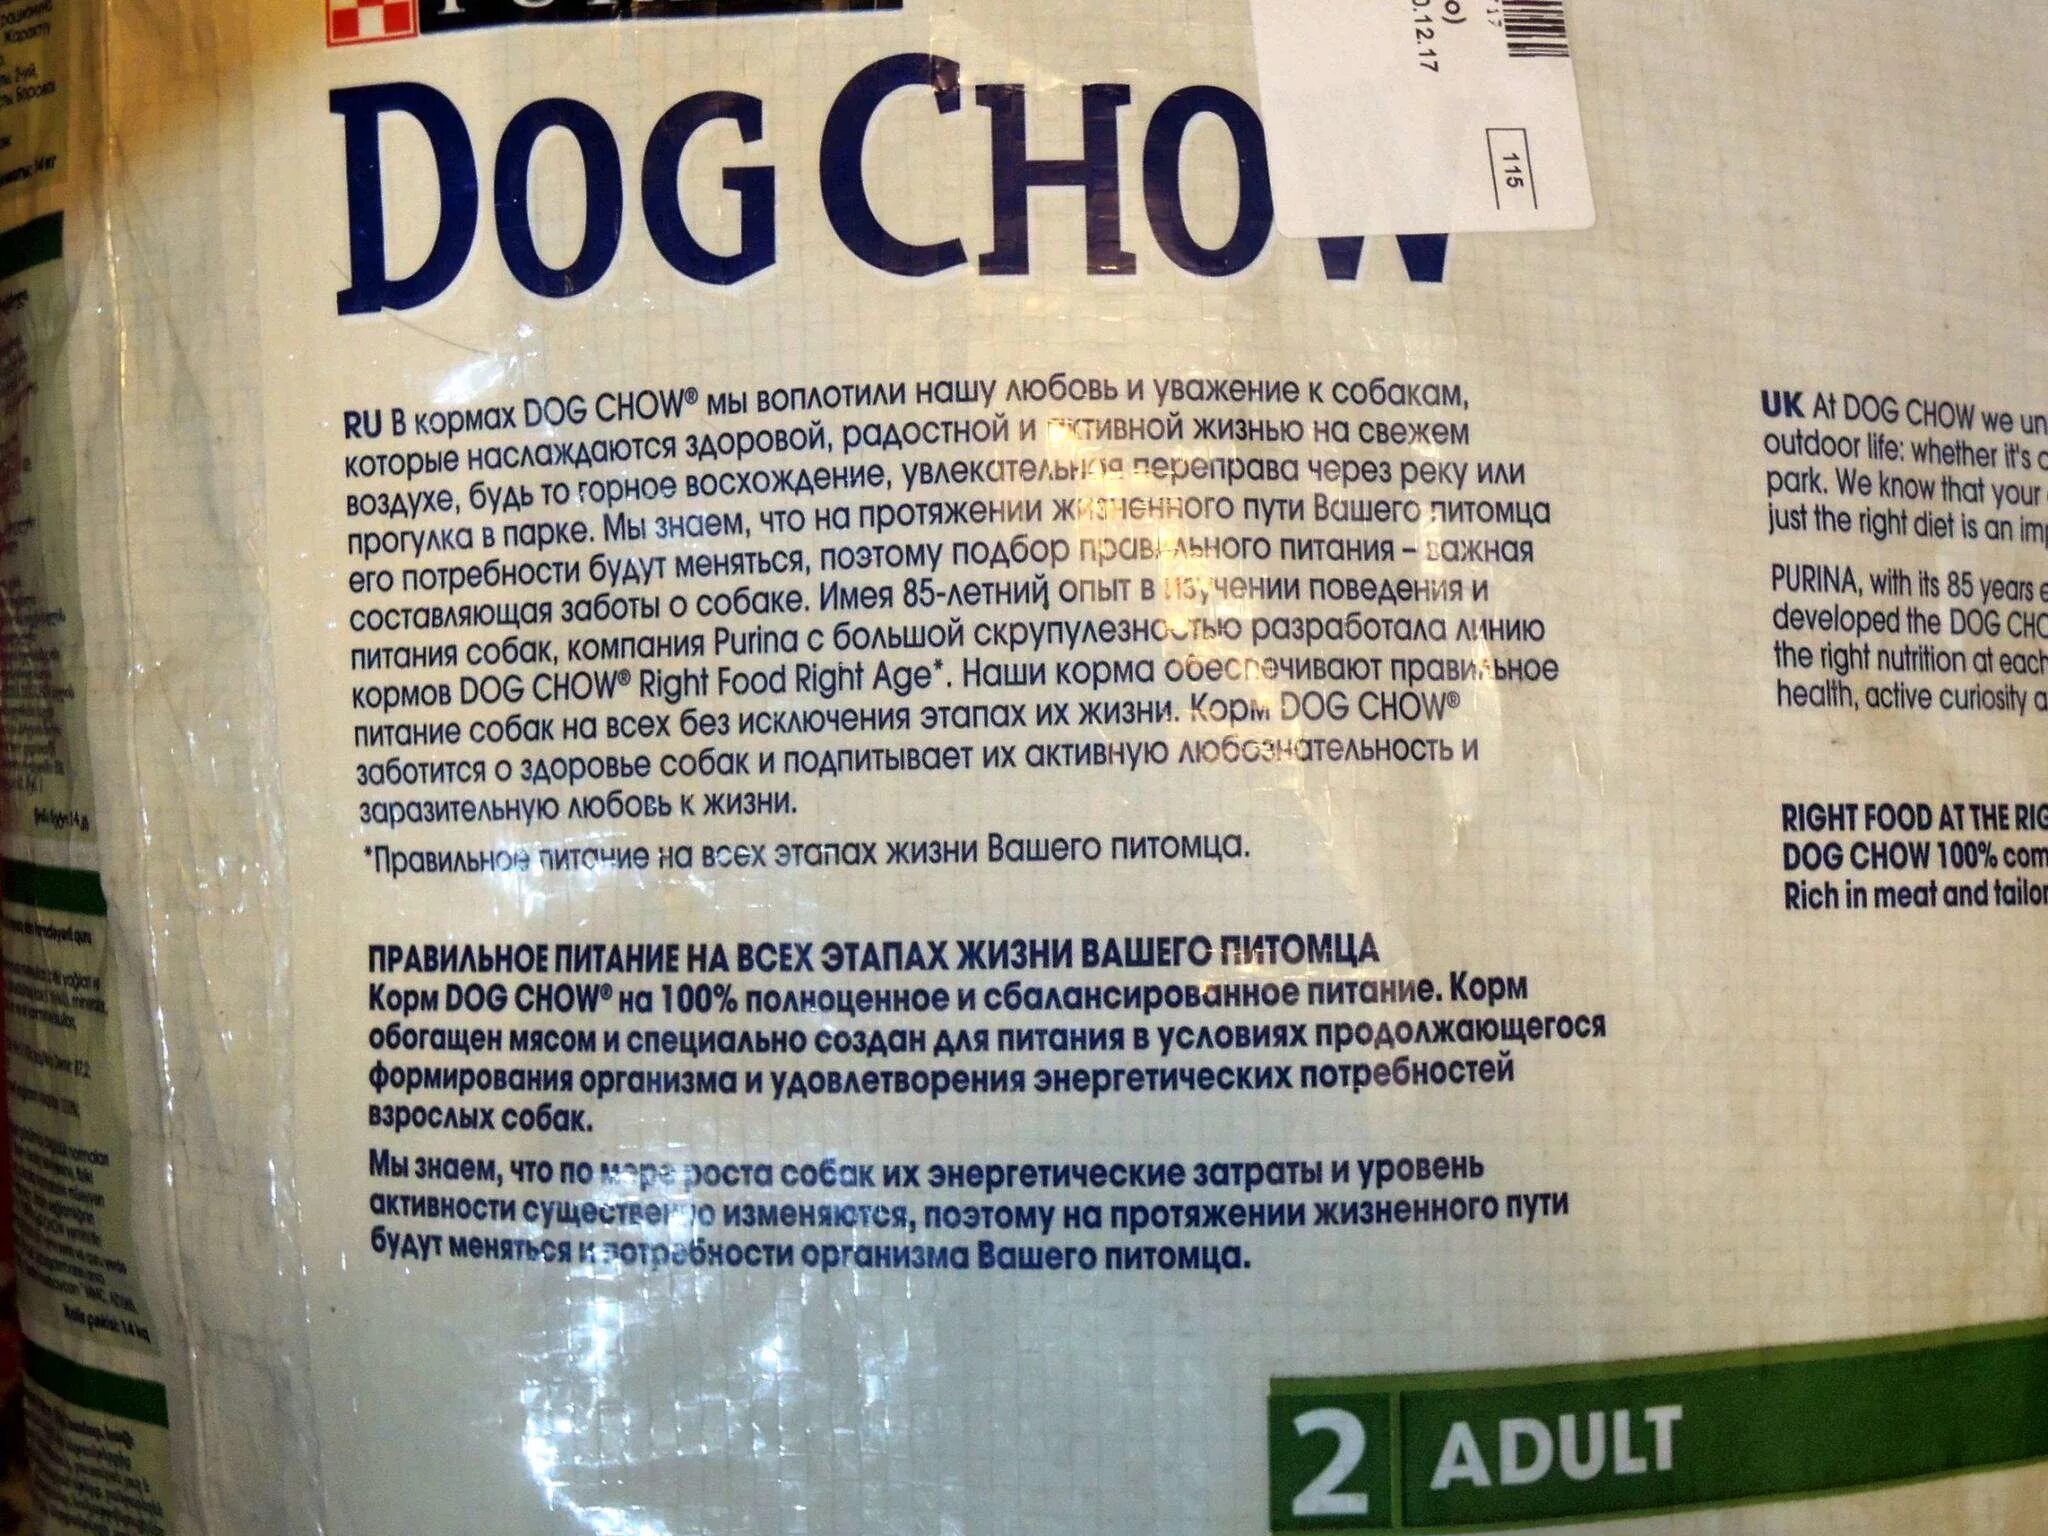 Корм для собак сухой 14 кг. Дог чау корм для собак 14 кг. Корм Dog Chow состав. Состав корма дог чау для собак. Dog Chow корм для собак состав.